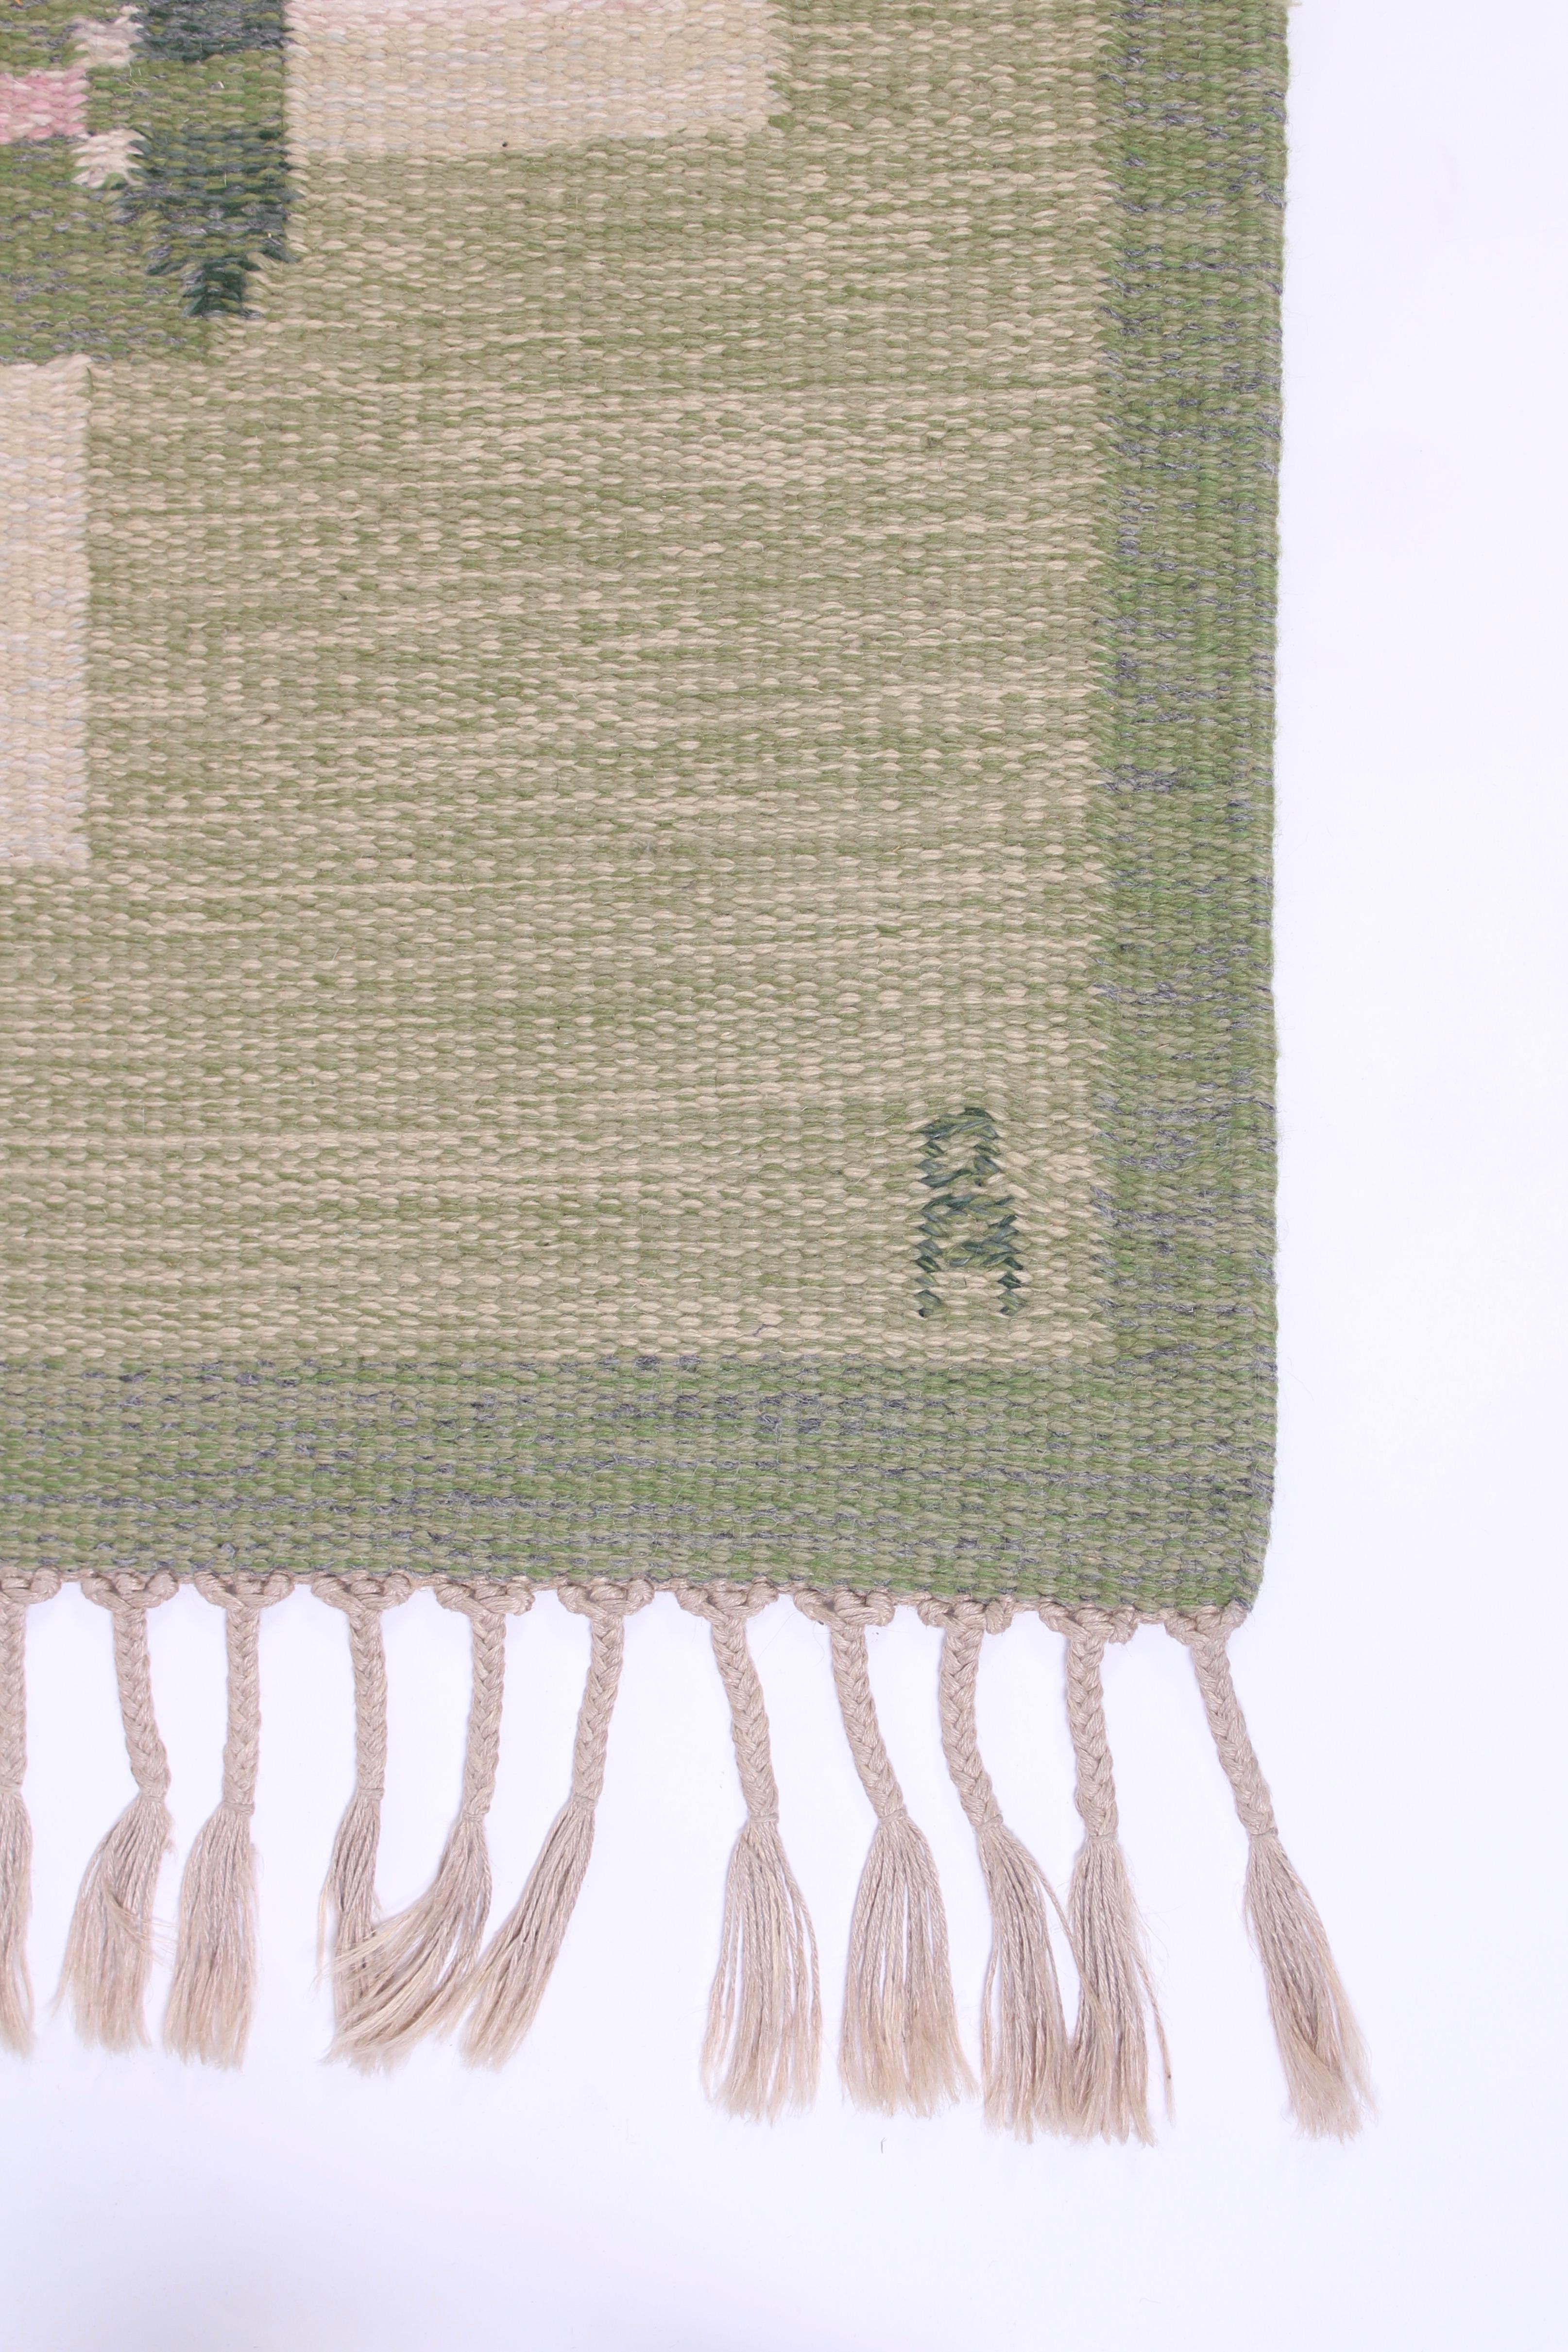 Swedish Midcentury Flat-Weave Carpet by Anna-Johanna Ångström, 1960s For Sale